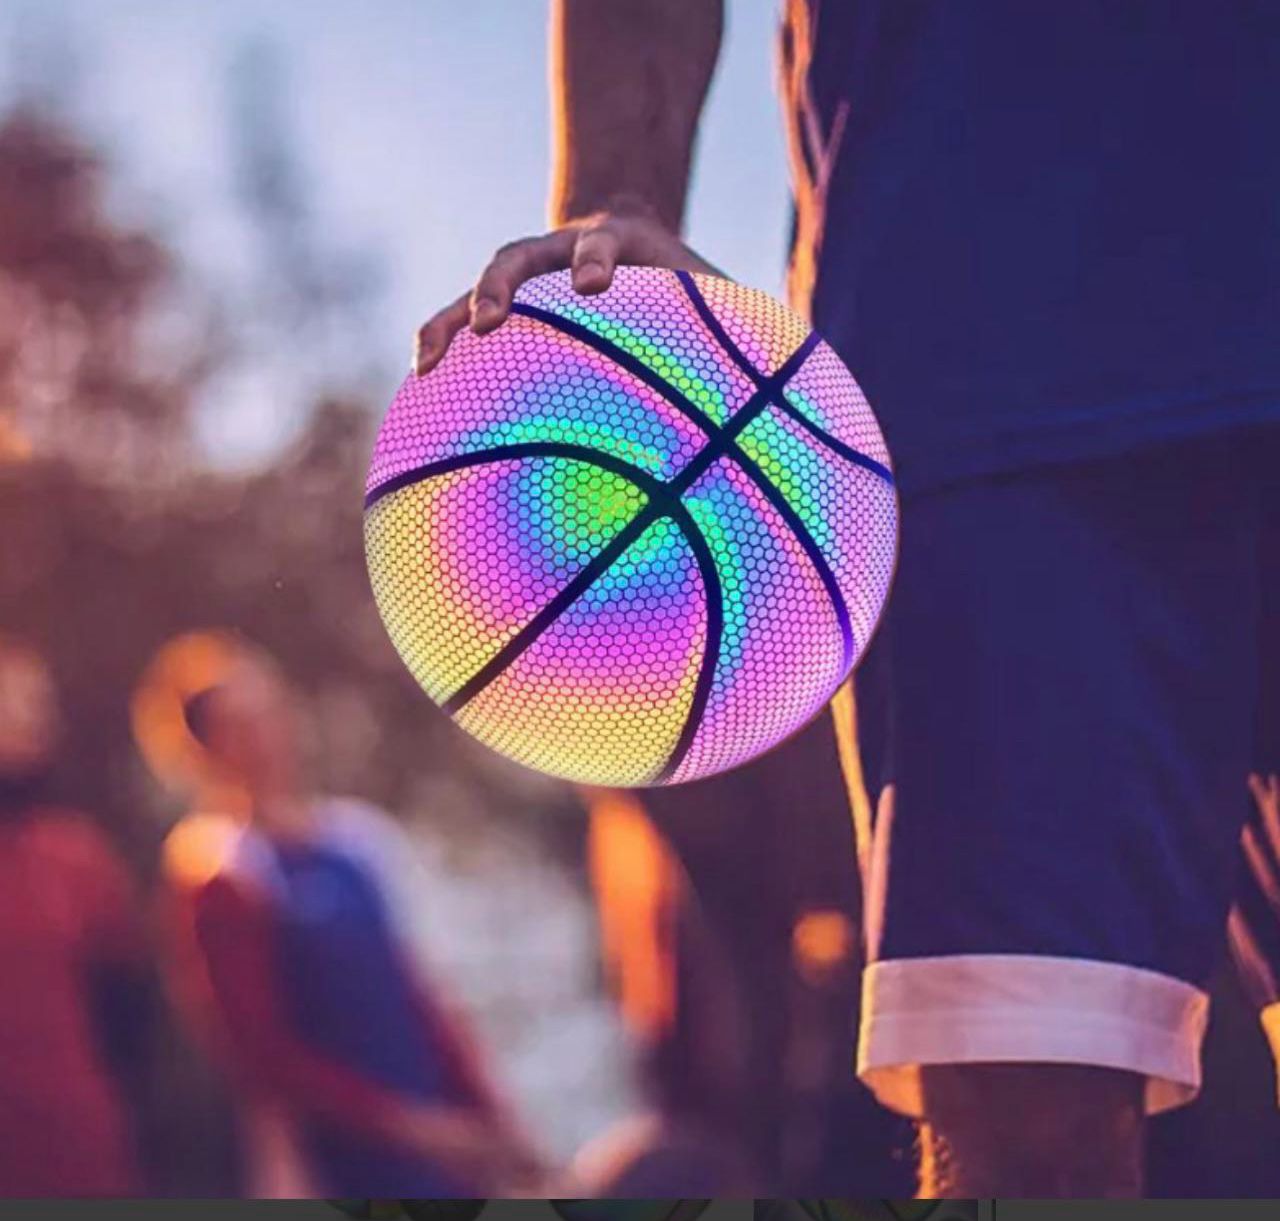 Minge Basketball reflectiva, holografic colorata, 24.5 cm